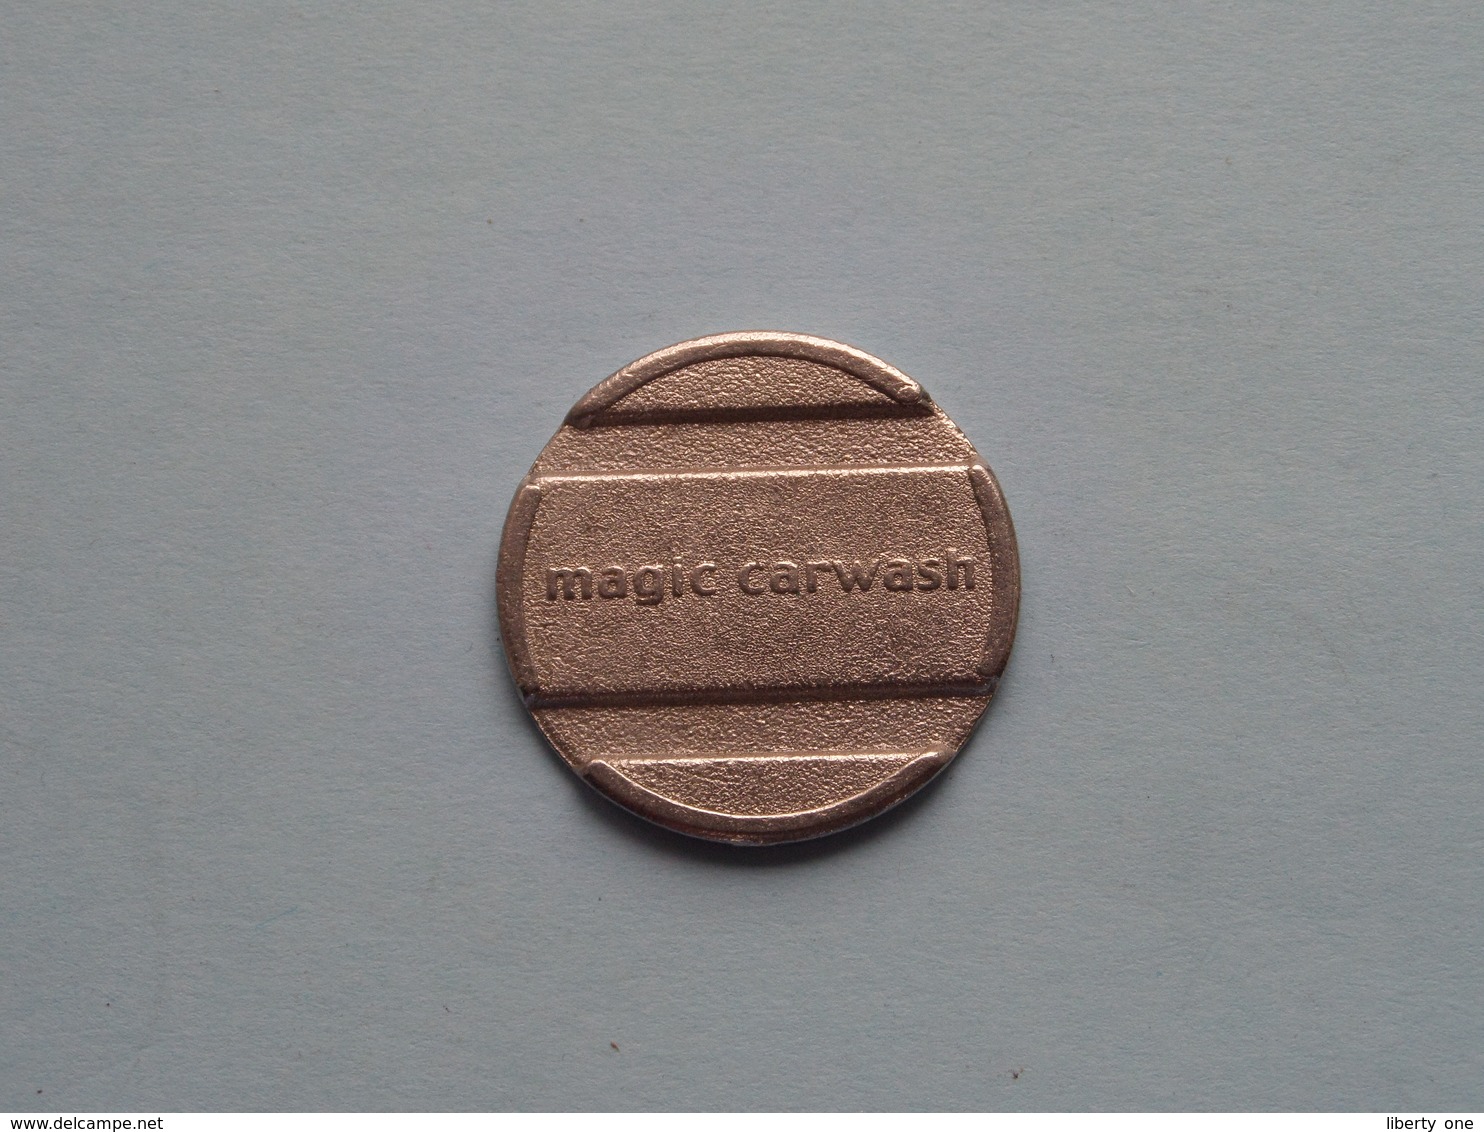 MAGIC CARWASH - 28 Mm. / 5.5 Gram ( Uncleaned ) ! - Professionali / Di Società